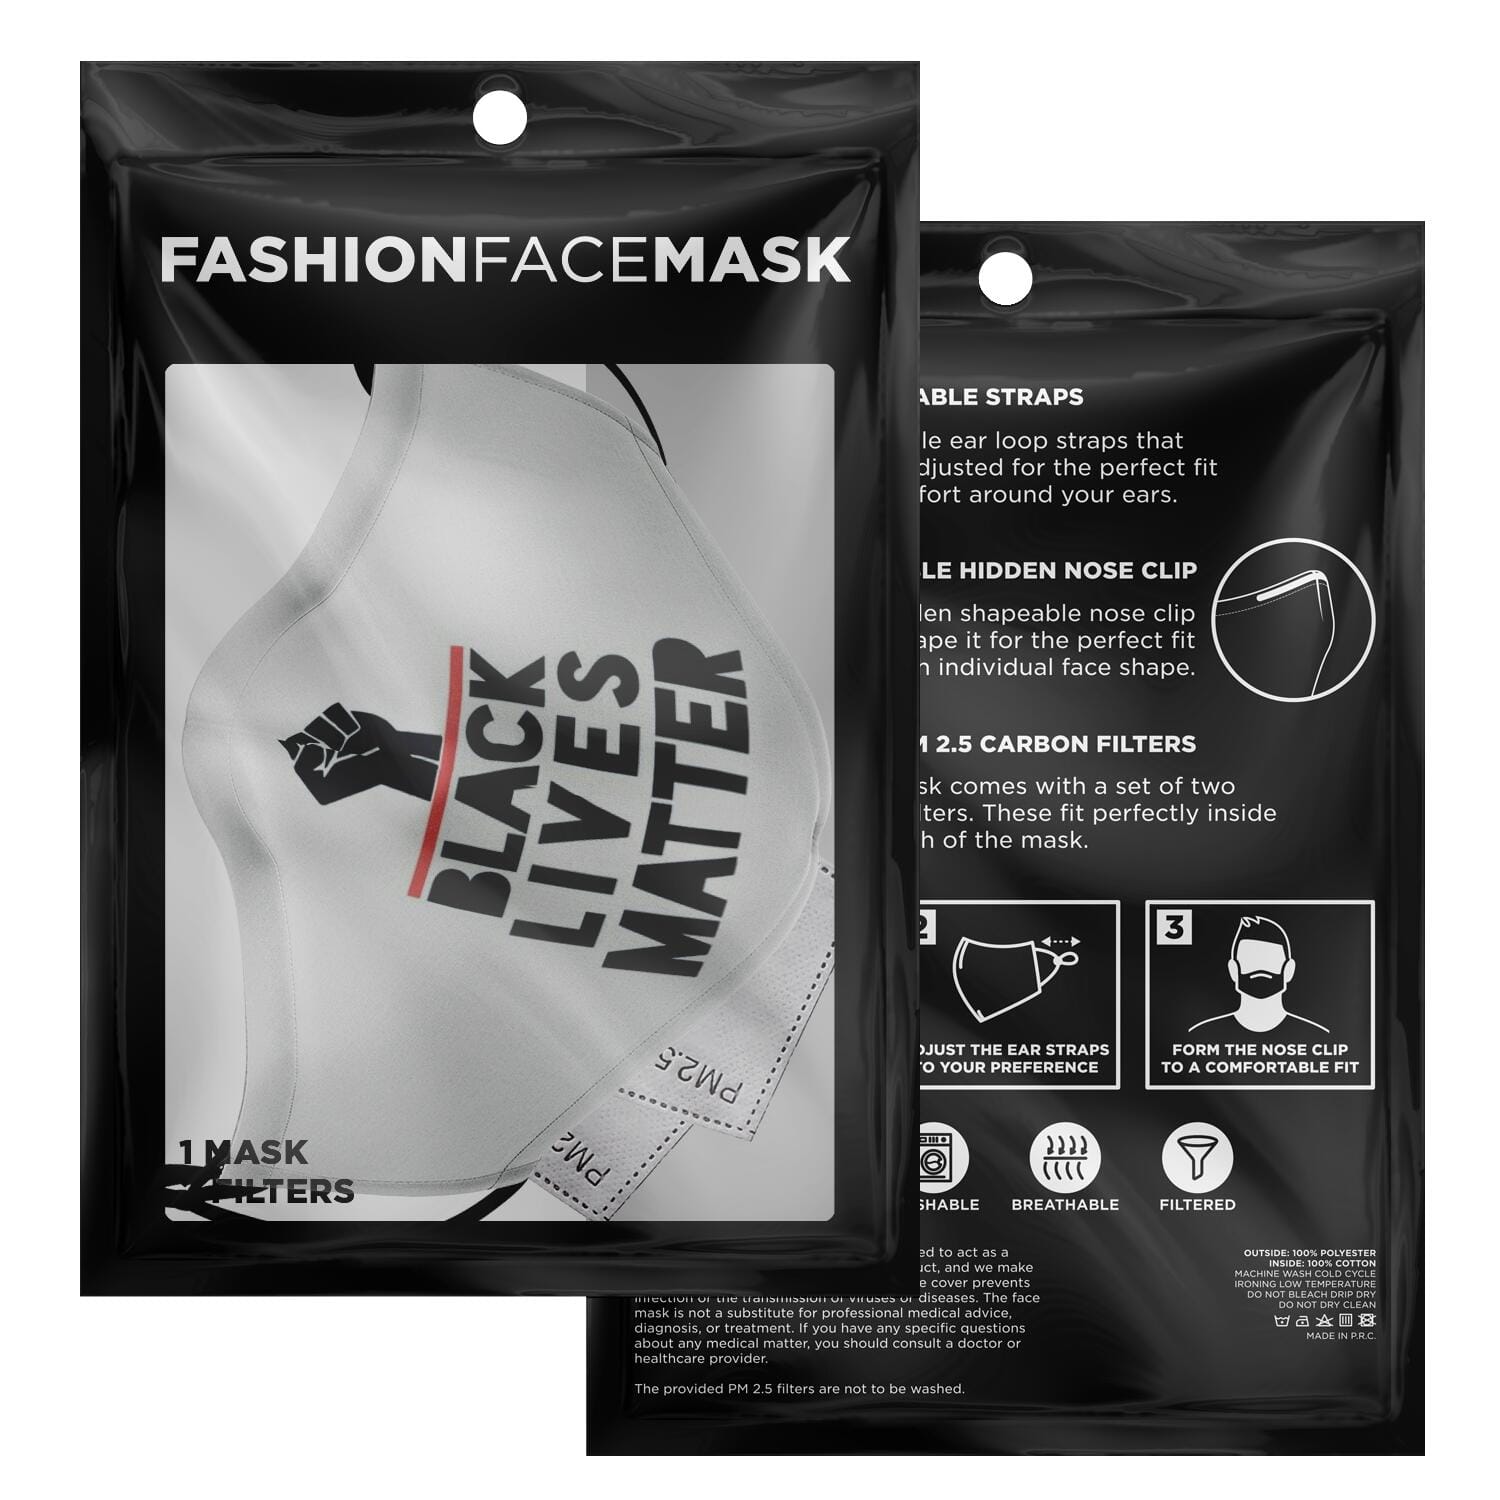 Black Lives Matter Face Mask (White) - True Blue Gear